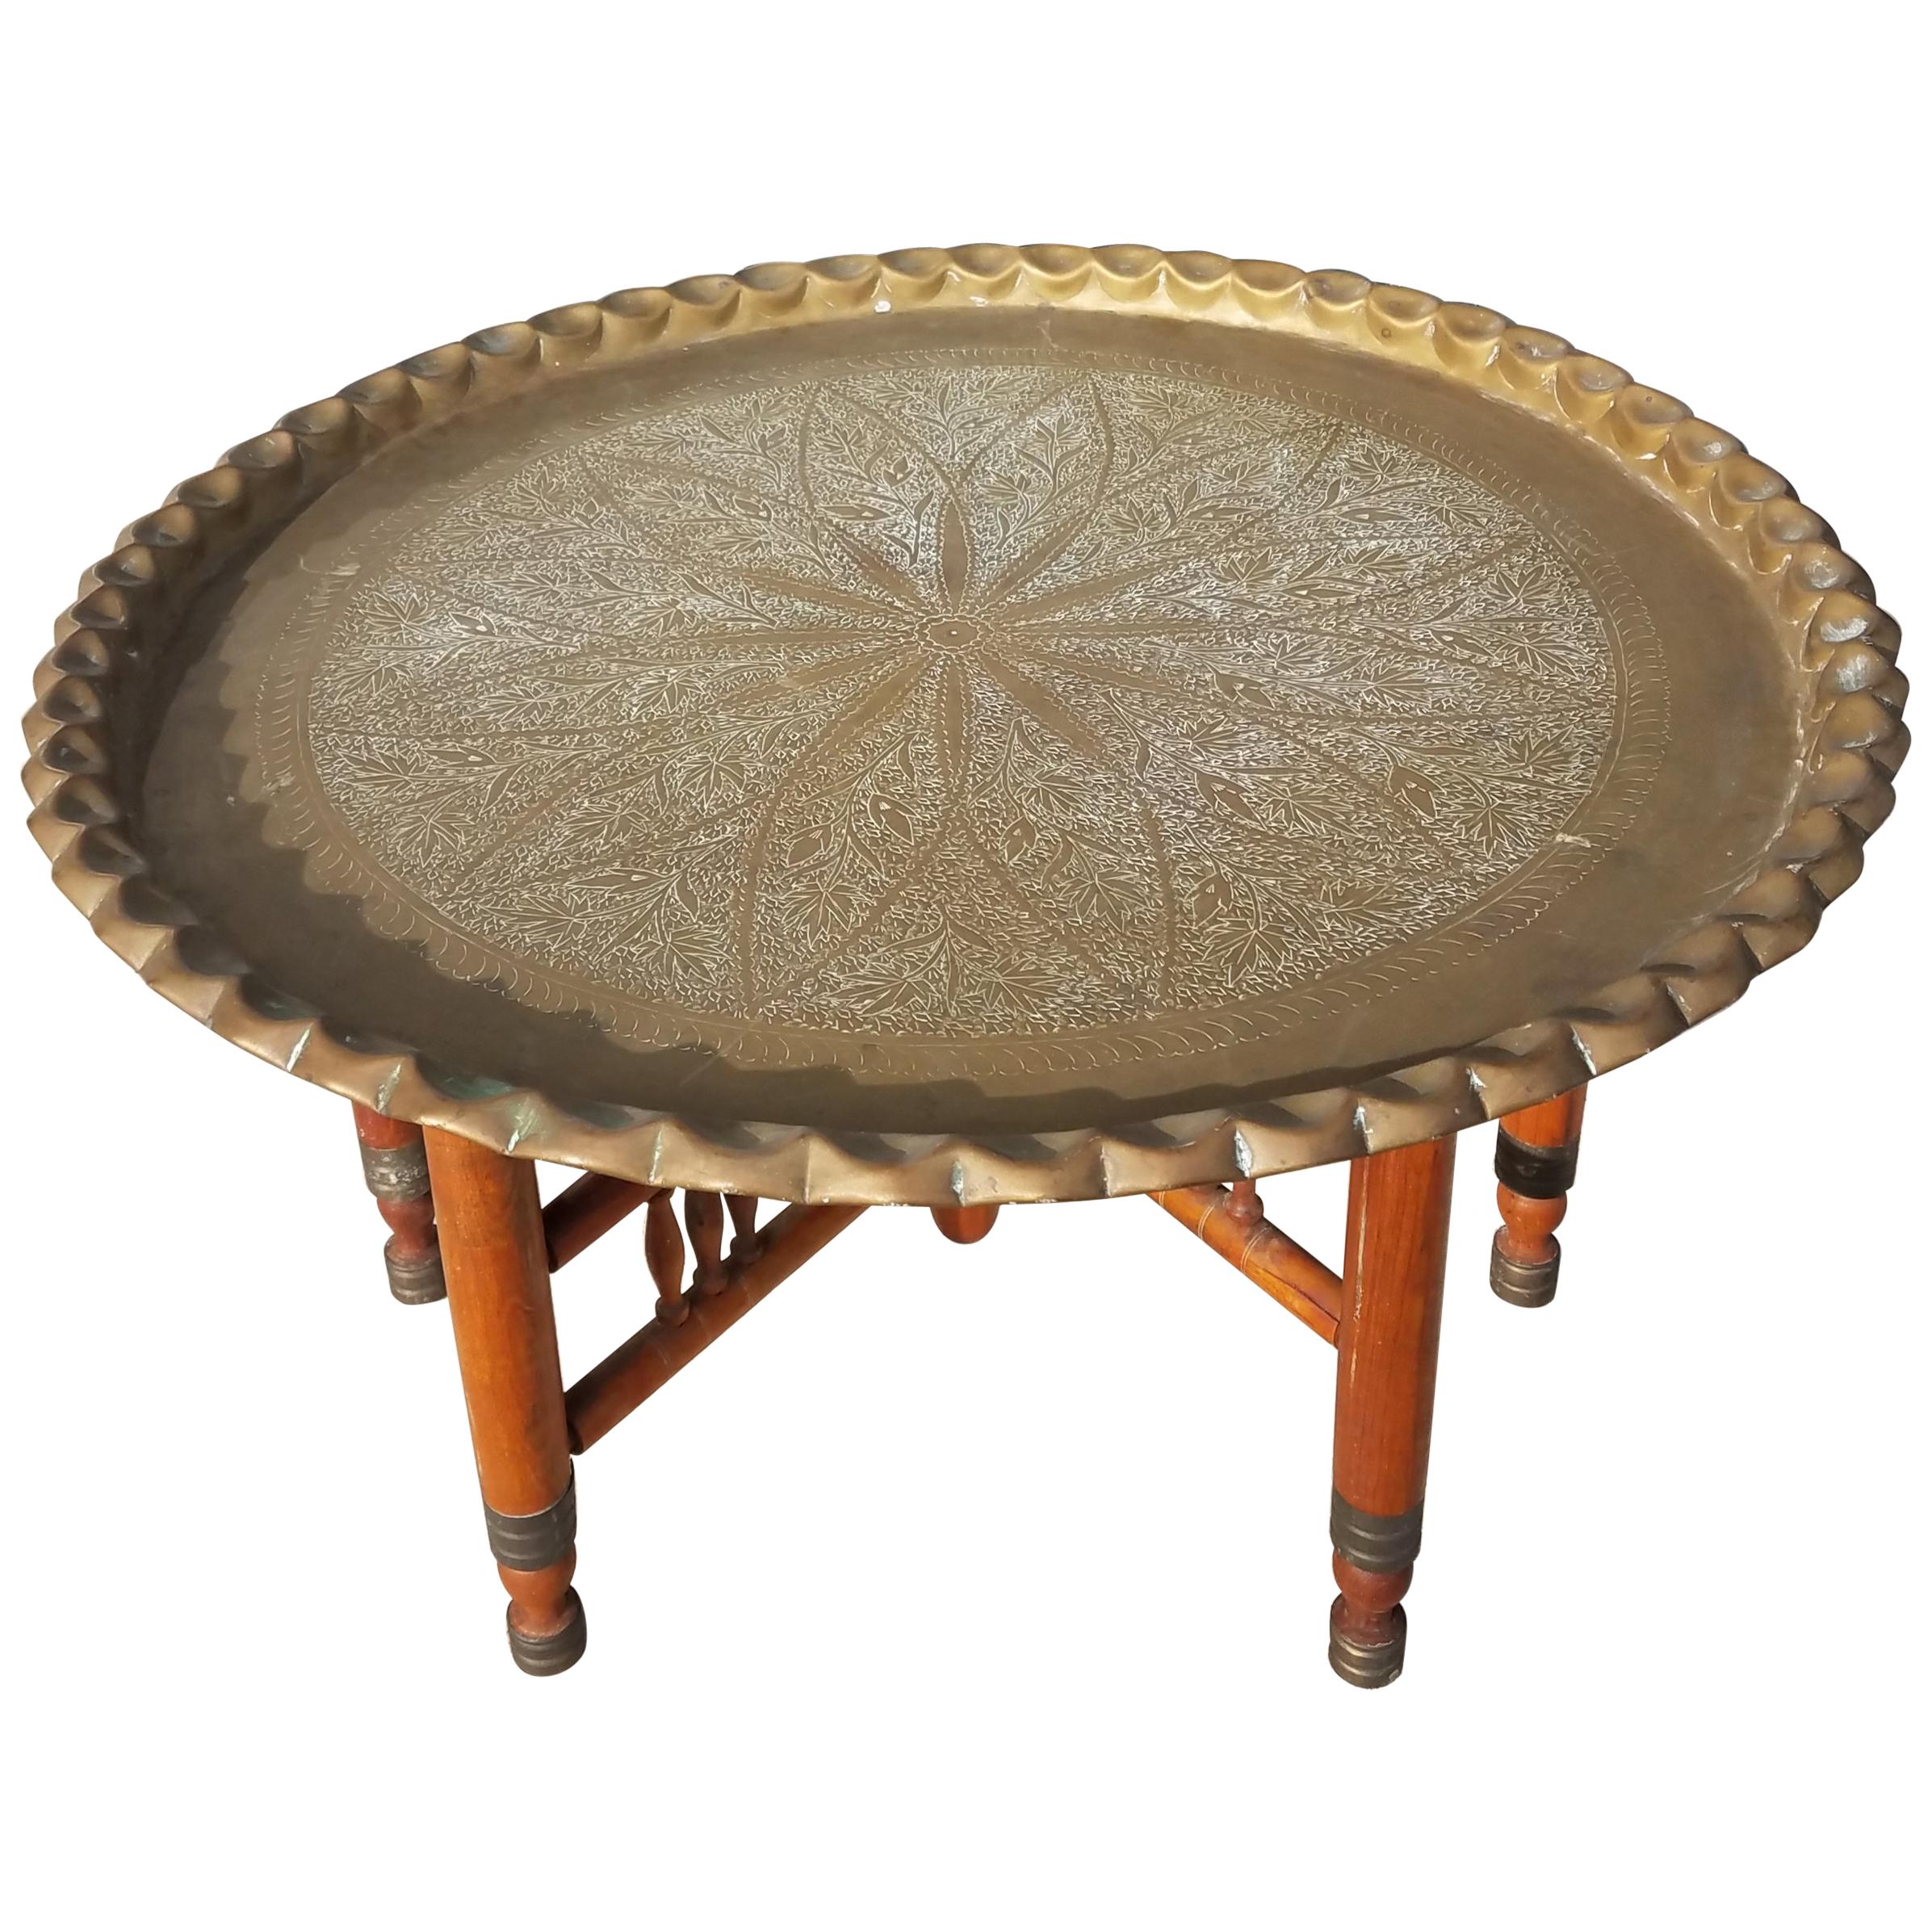 Table basse marocaine en cuivre, ronde avec base pliante en bois